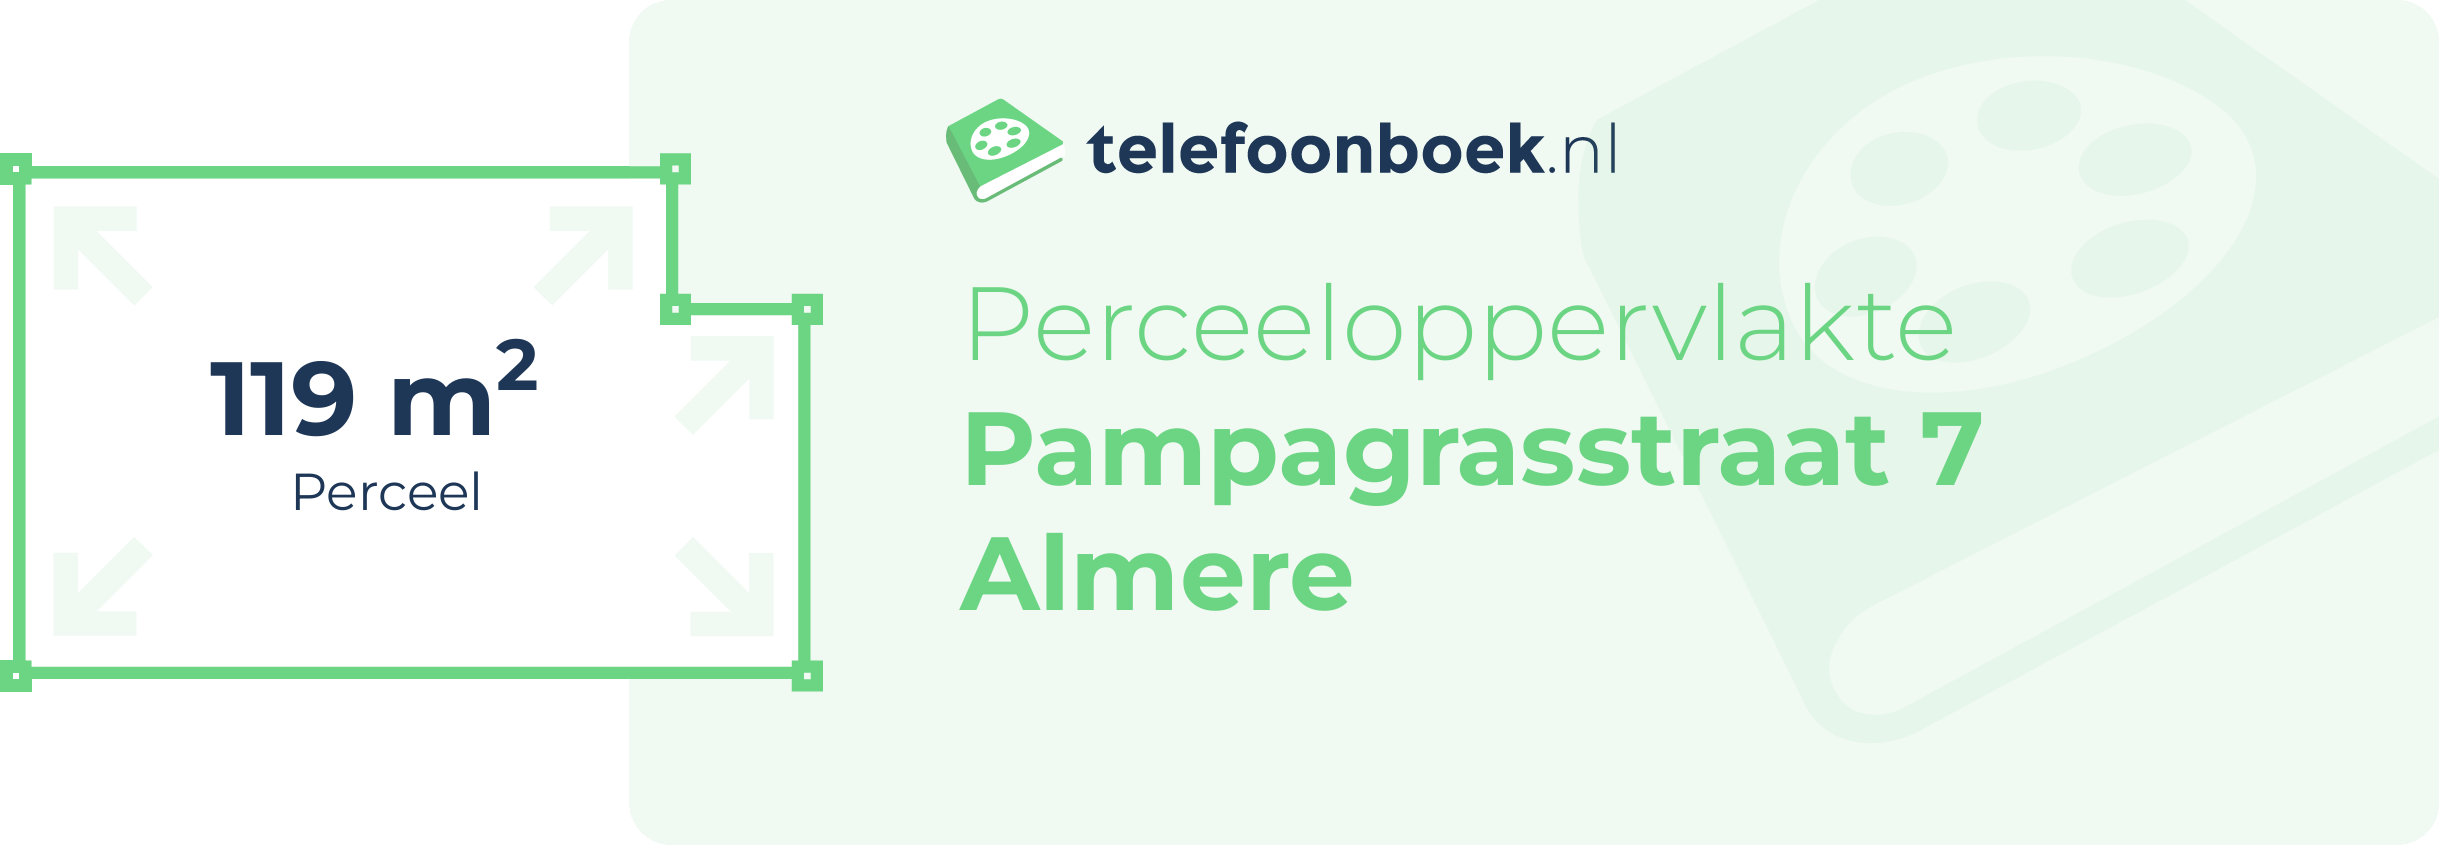 Perceeloppervlakte Pampagrasstraat 7 Almere